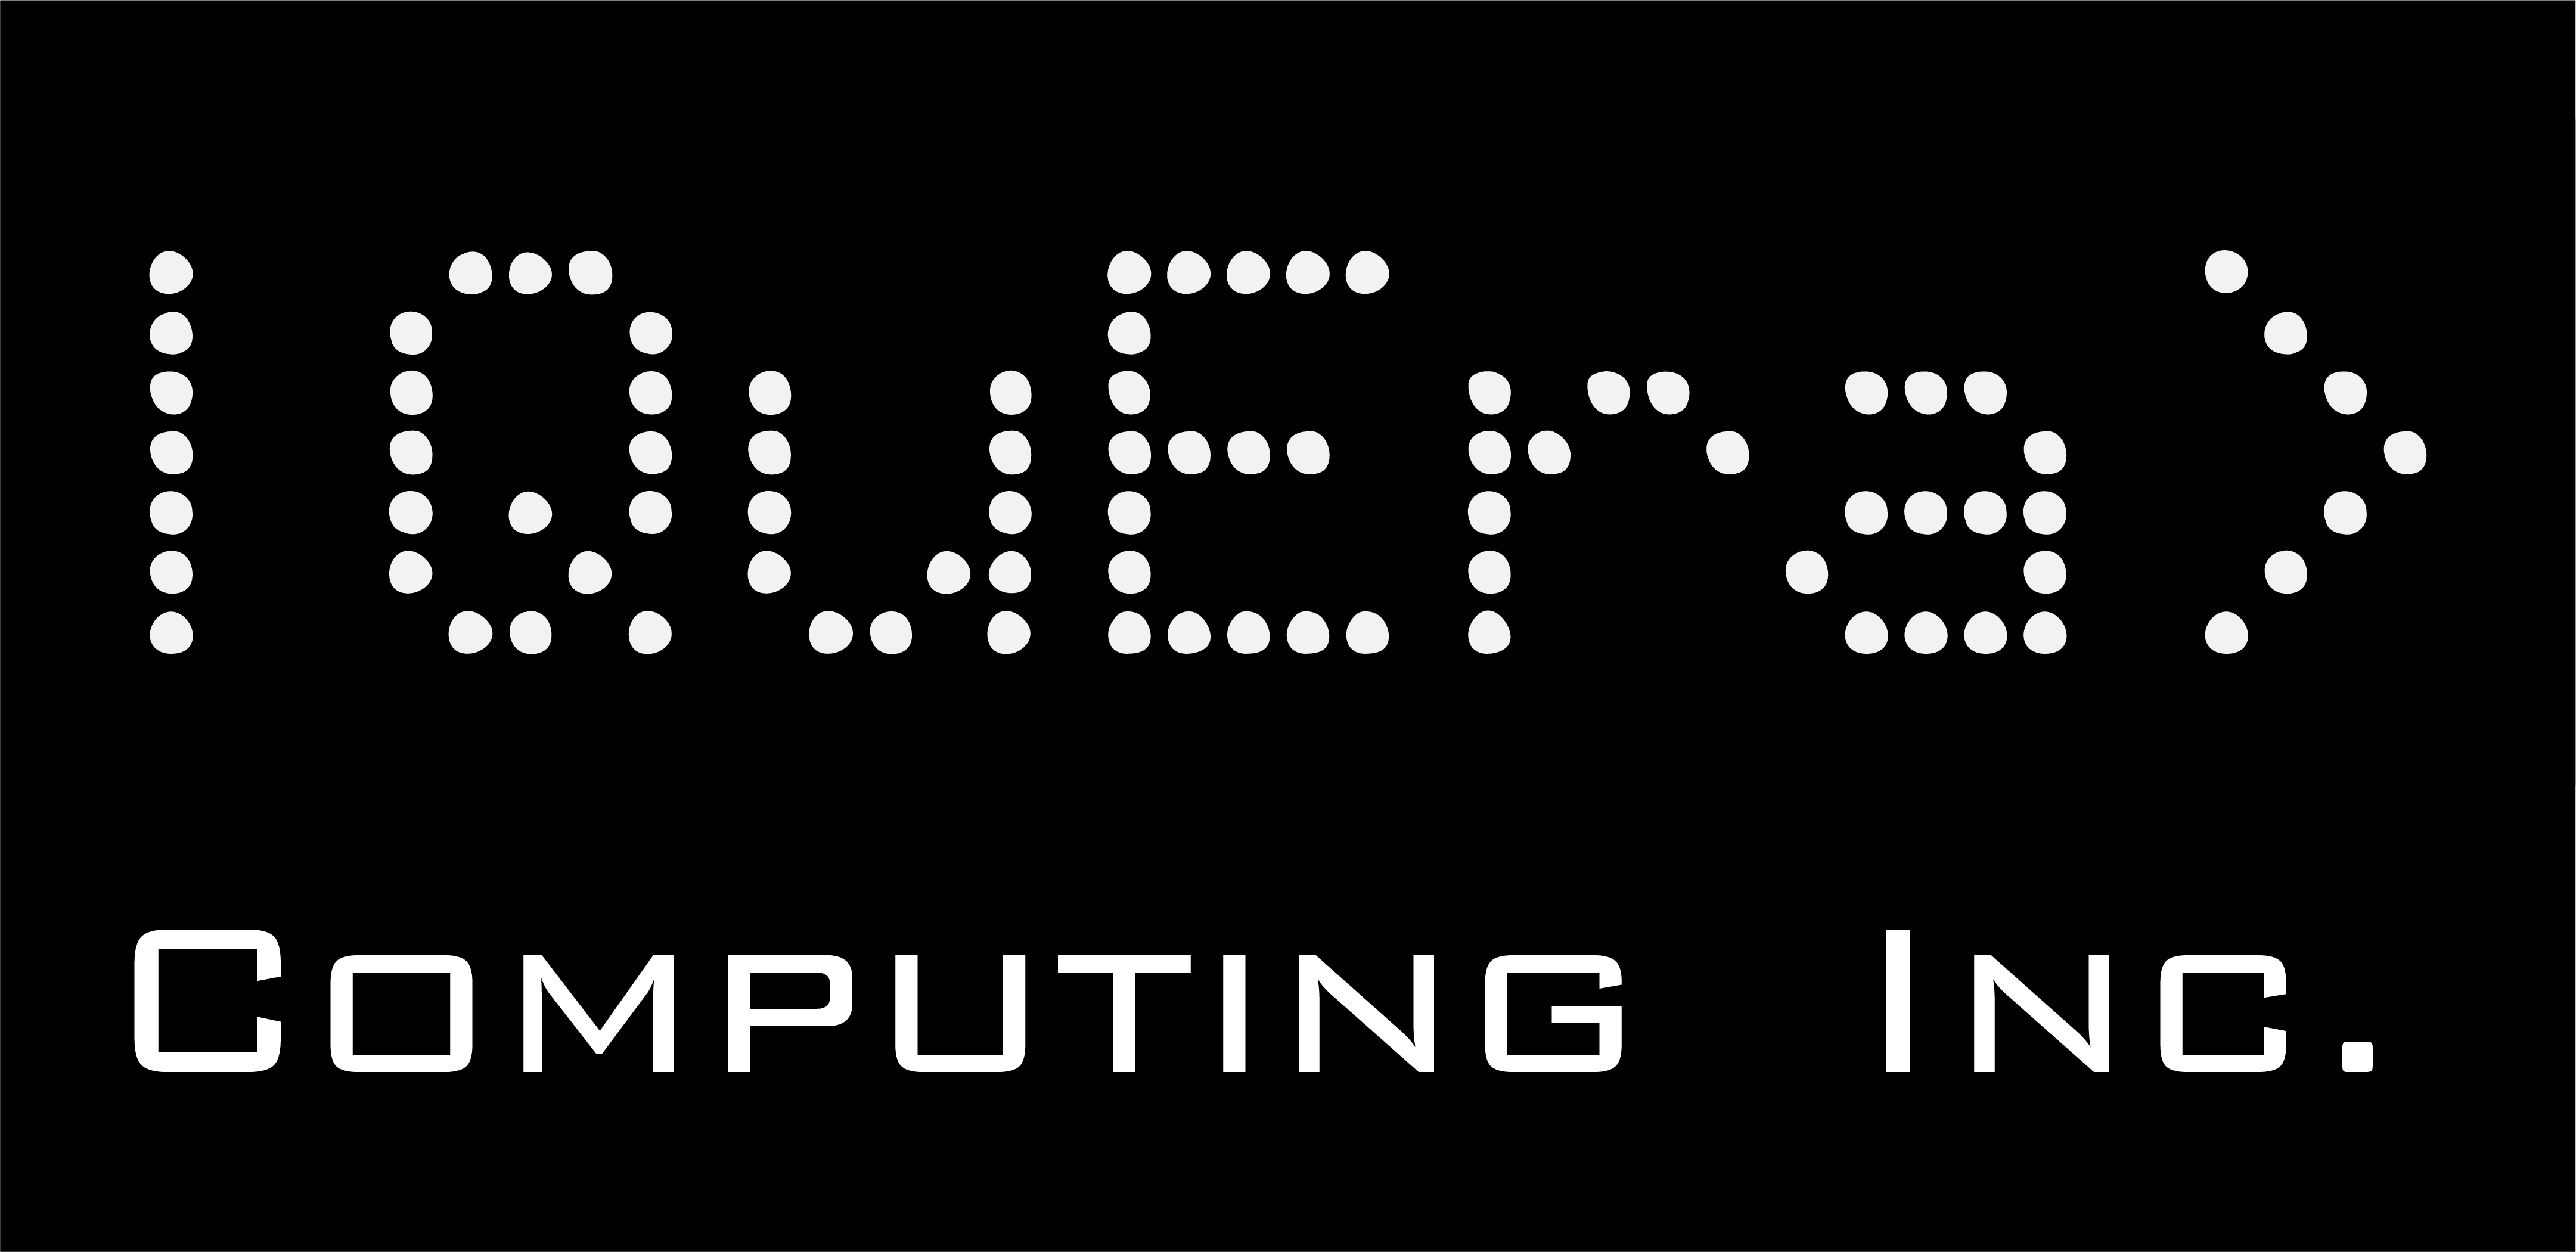 QuEra Computing은 양자 장치 출시를 위해 17만 달러를 투자하여 잠복 상태에서 벗어났습니다.